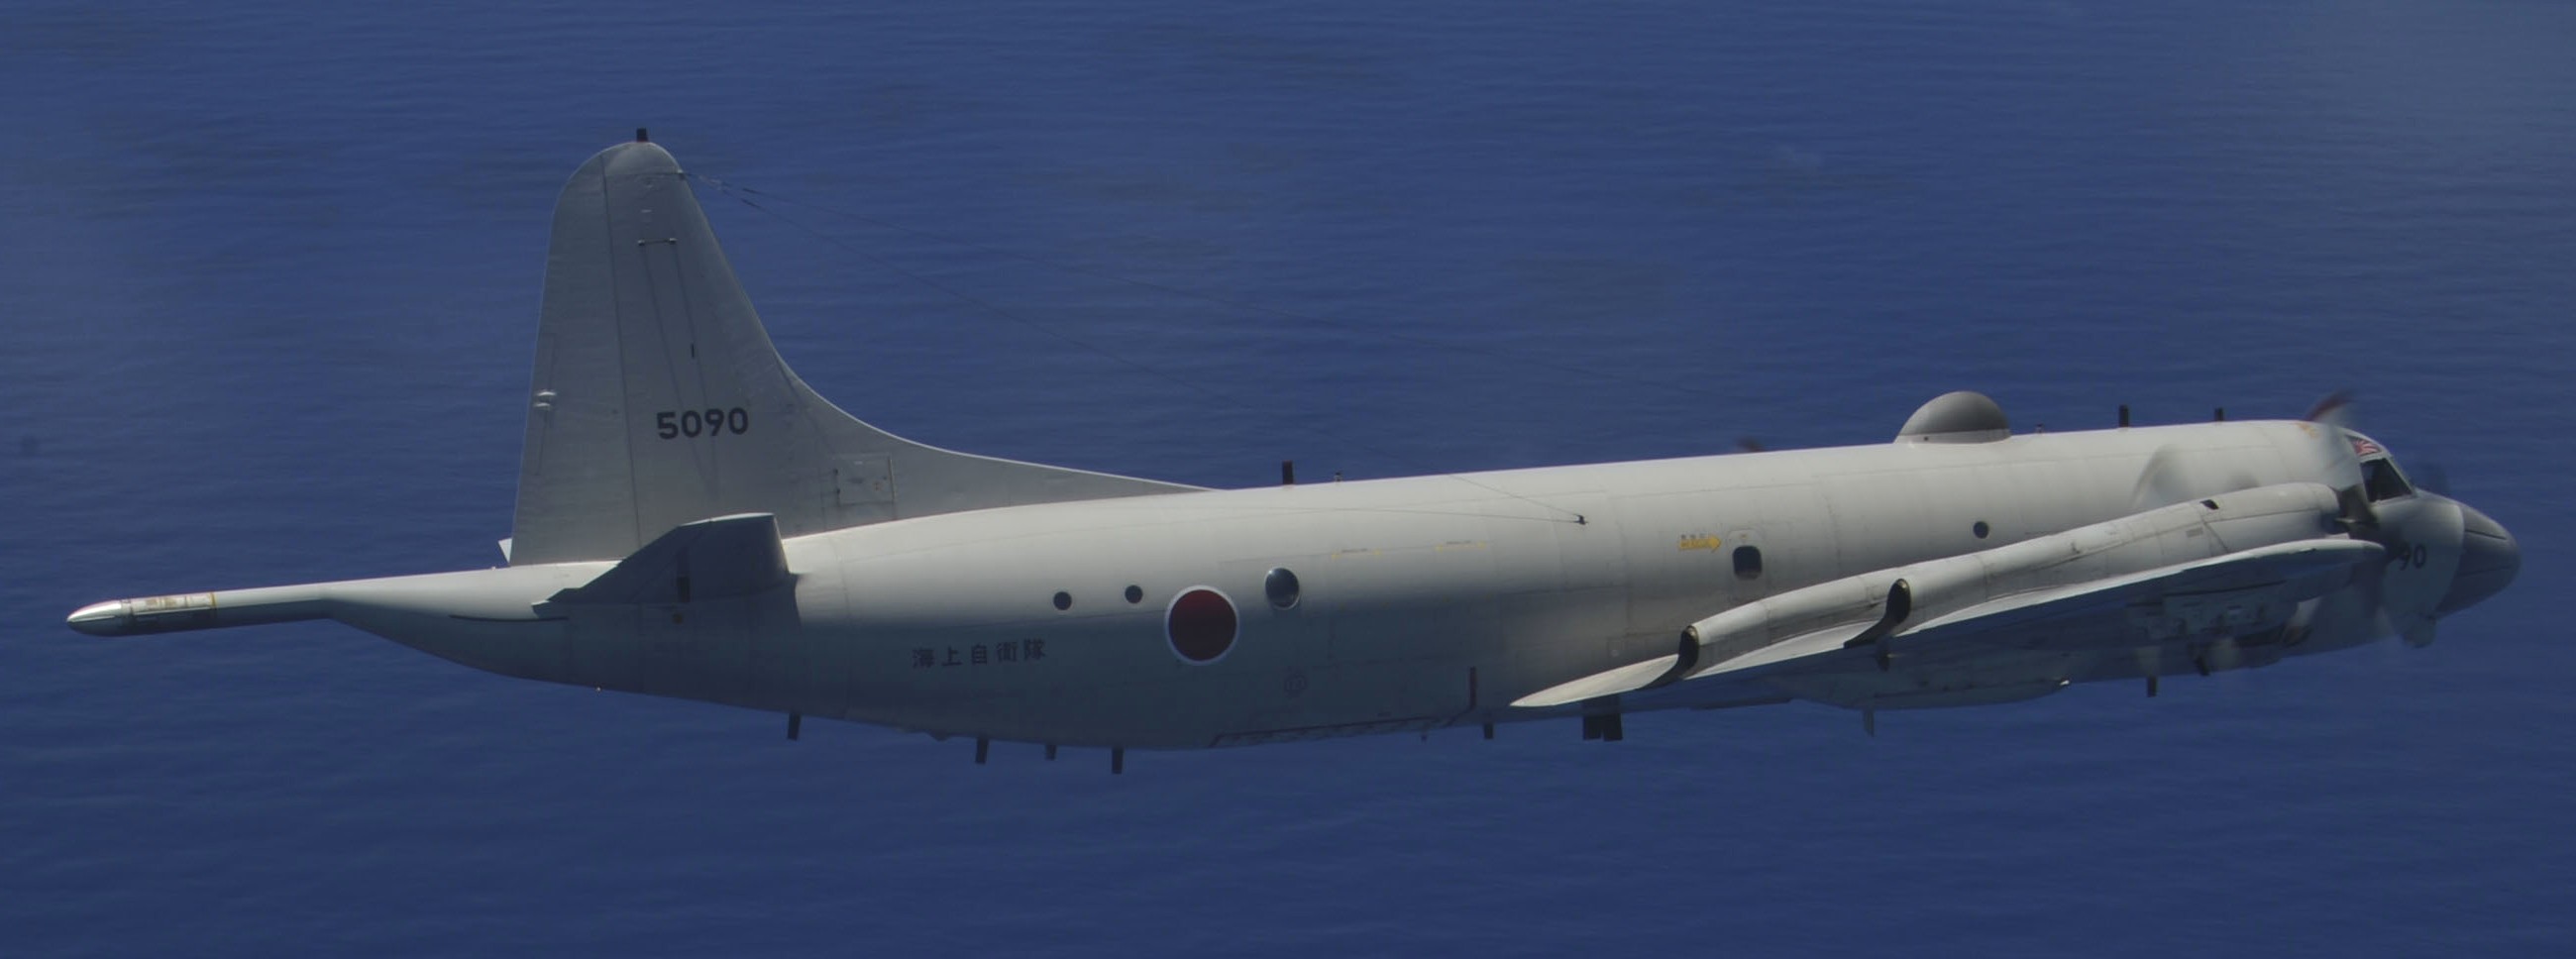 kawasaki p-3c orion patrol aircraft mpa japan maritime self defense force jmsdf 5090 02